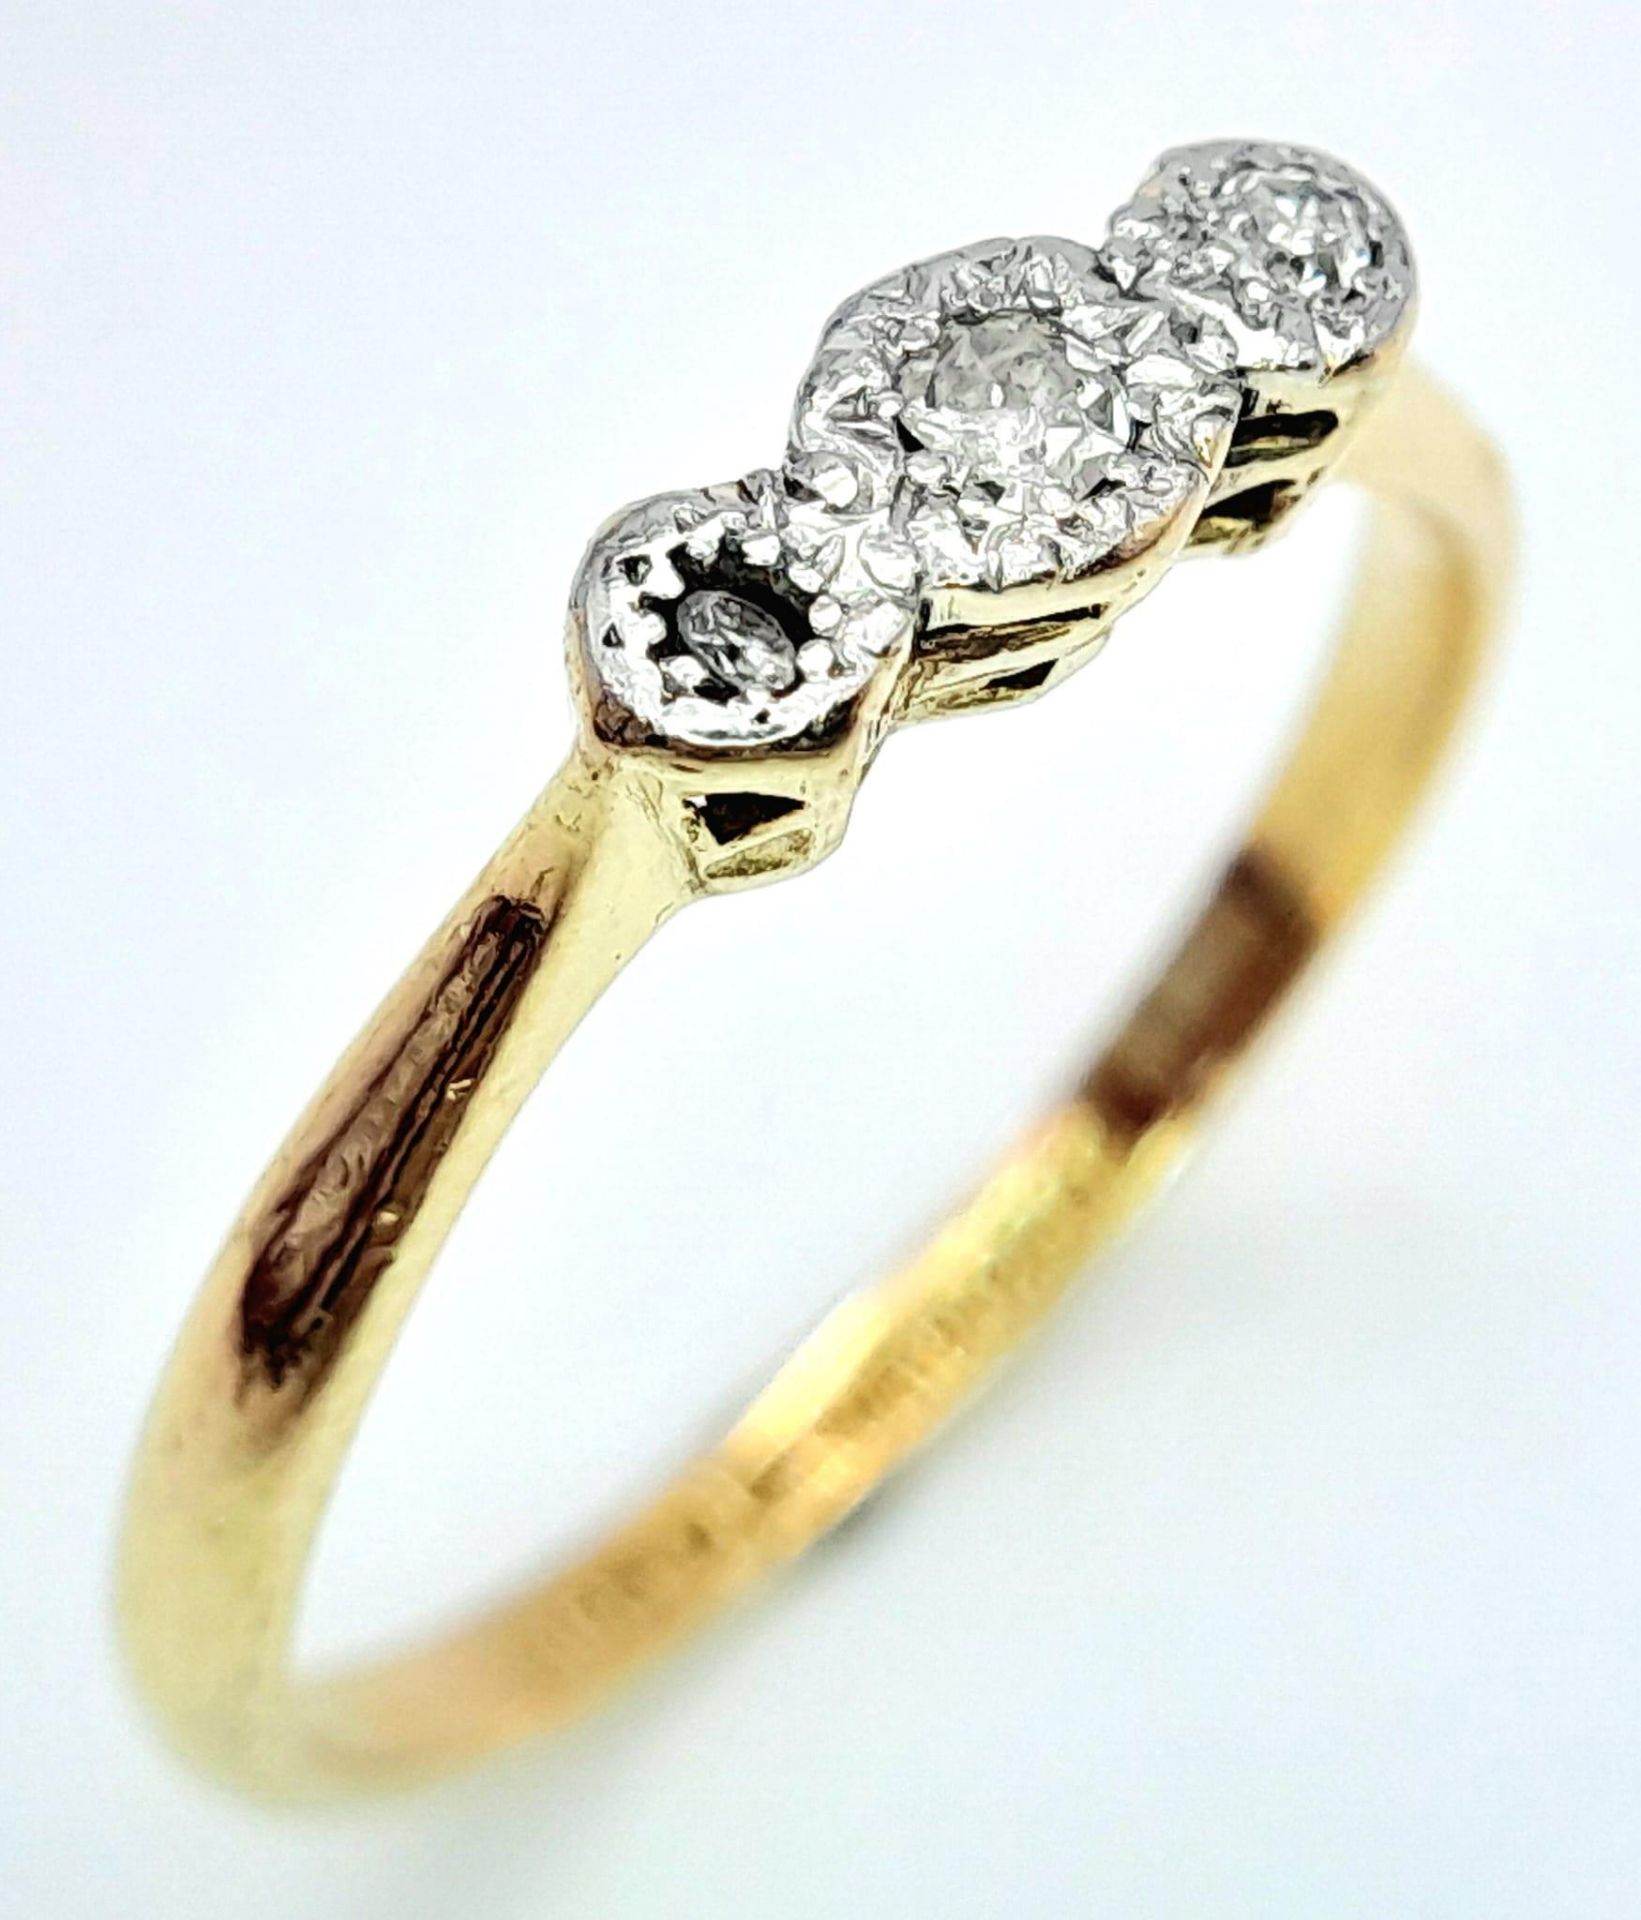 AN 18K YELLOW GOLD & PLATINUM VINTAGE 3 STONE DIAMOND RING. 2.3G. SIZE P - Image 3 of 6